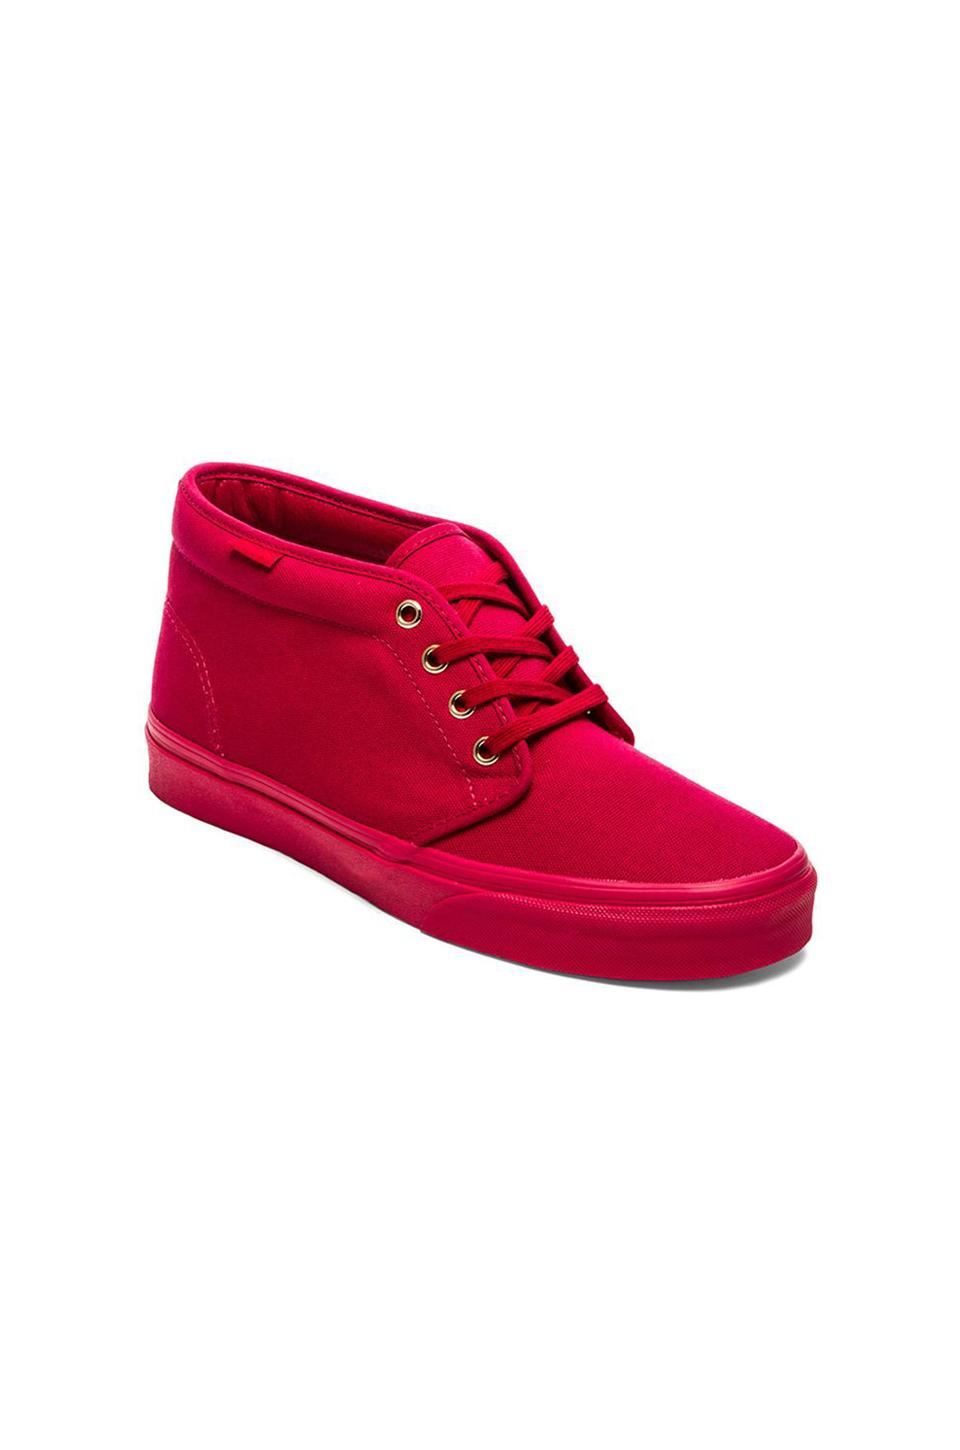 Vans Chukka Boot in Crimson (Red) for 